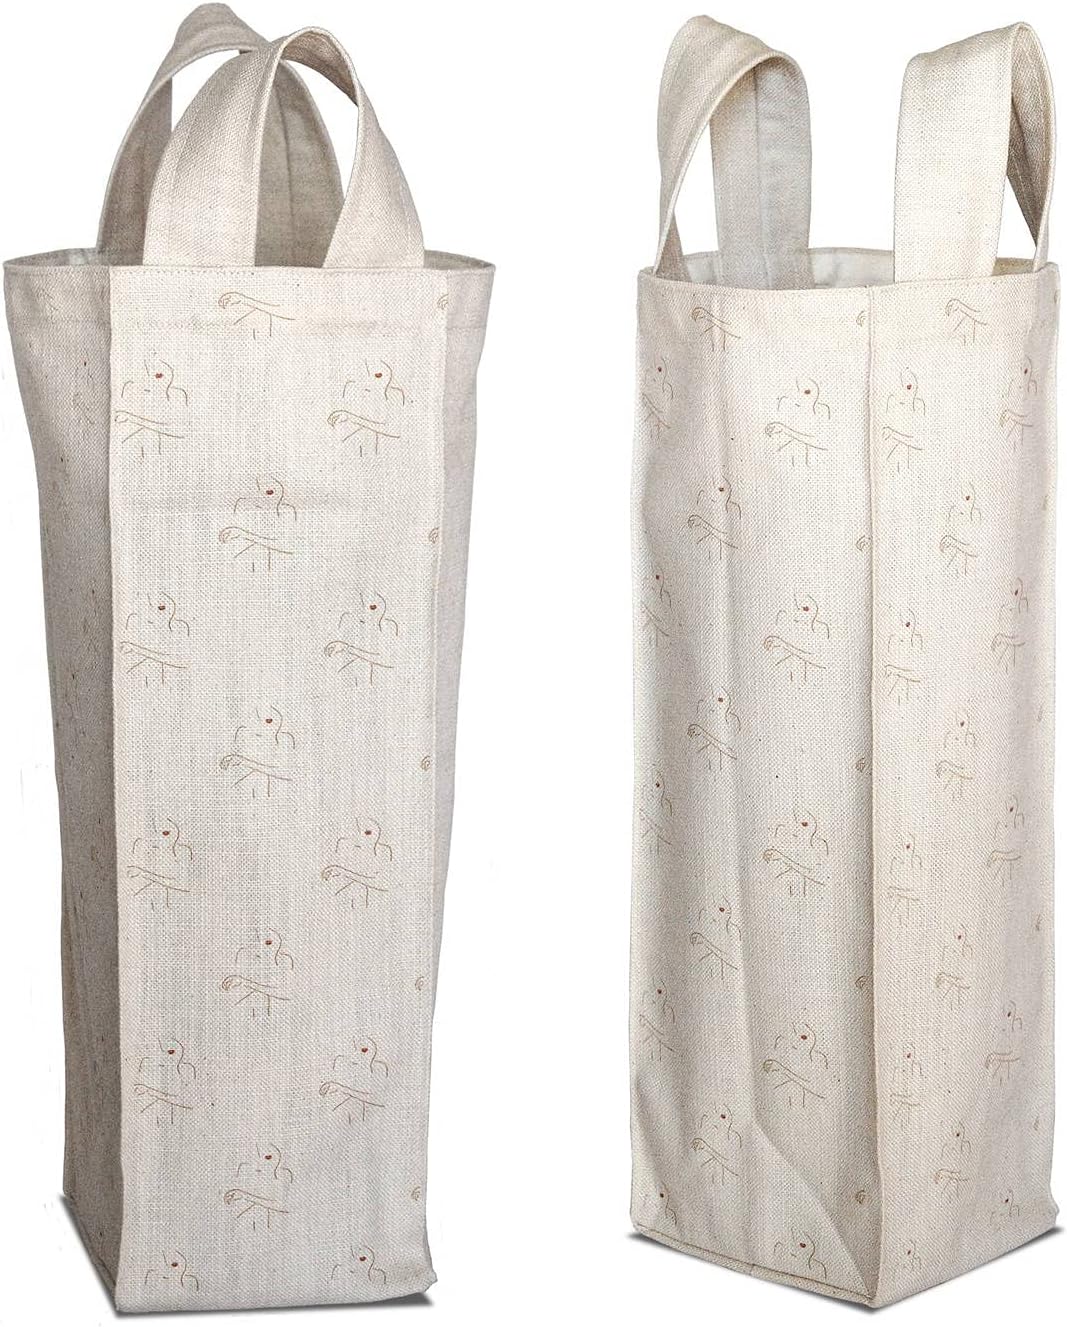 Bonamaison Digitally Printed 50% Cotton - 50% Polyester Sketch Design White Wine Bag RRP 3.57 CLEARANCE XL 2.99